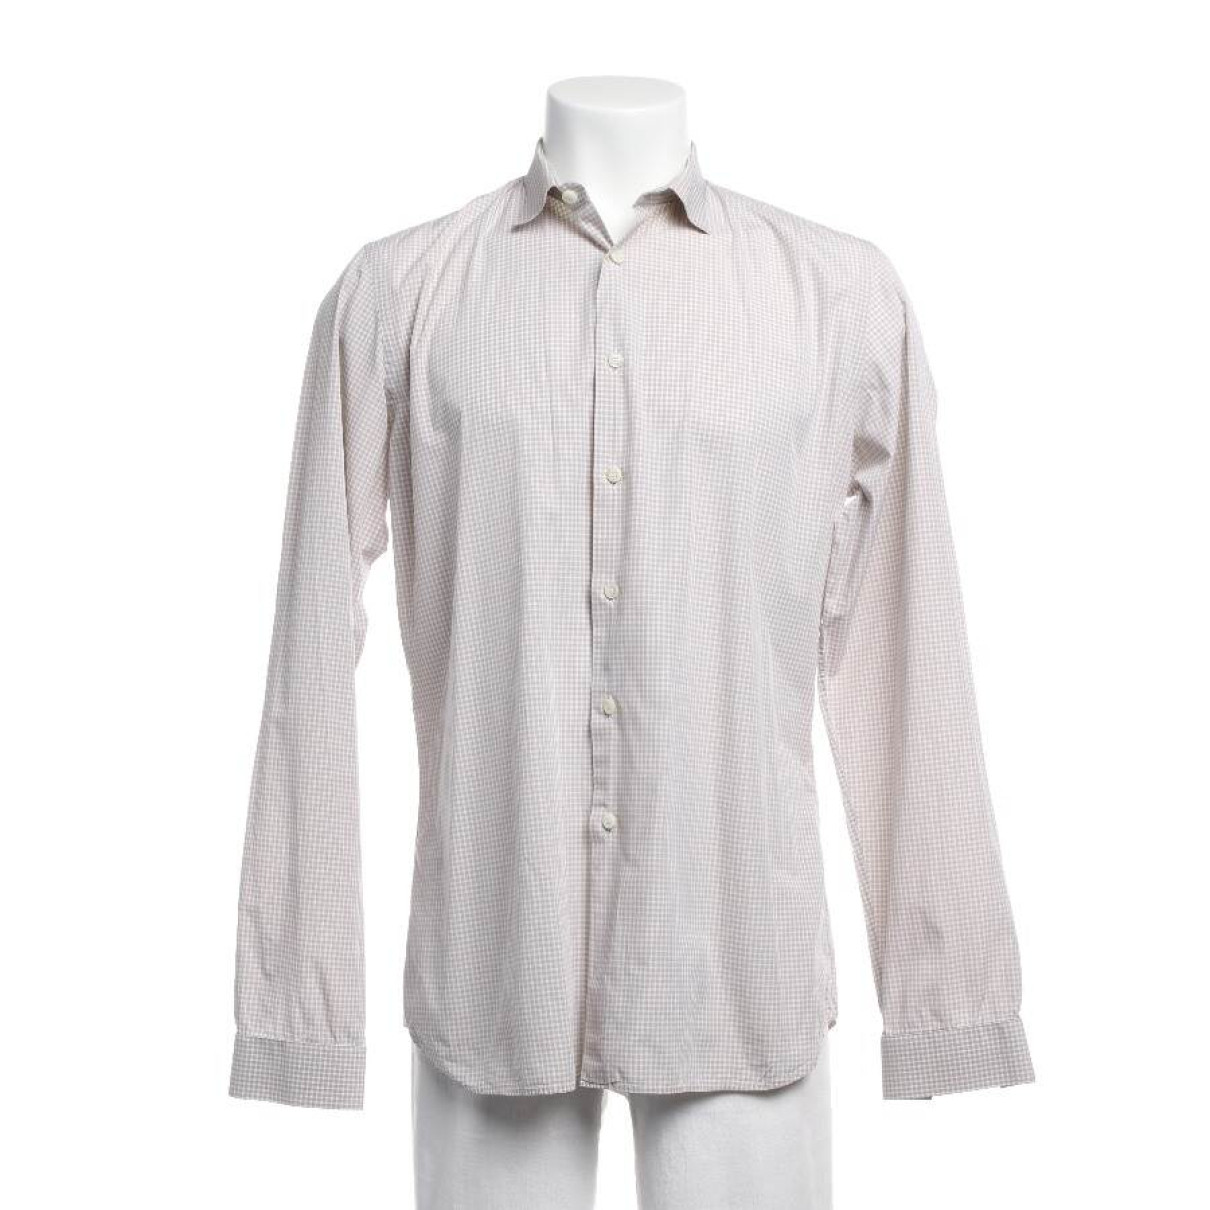 clothing Prada shirts for Male Cotton 42 EU (tour de cou / collar). Used condition